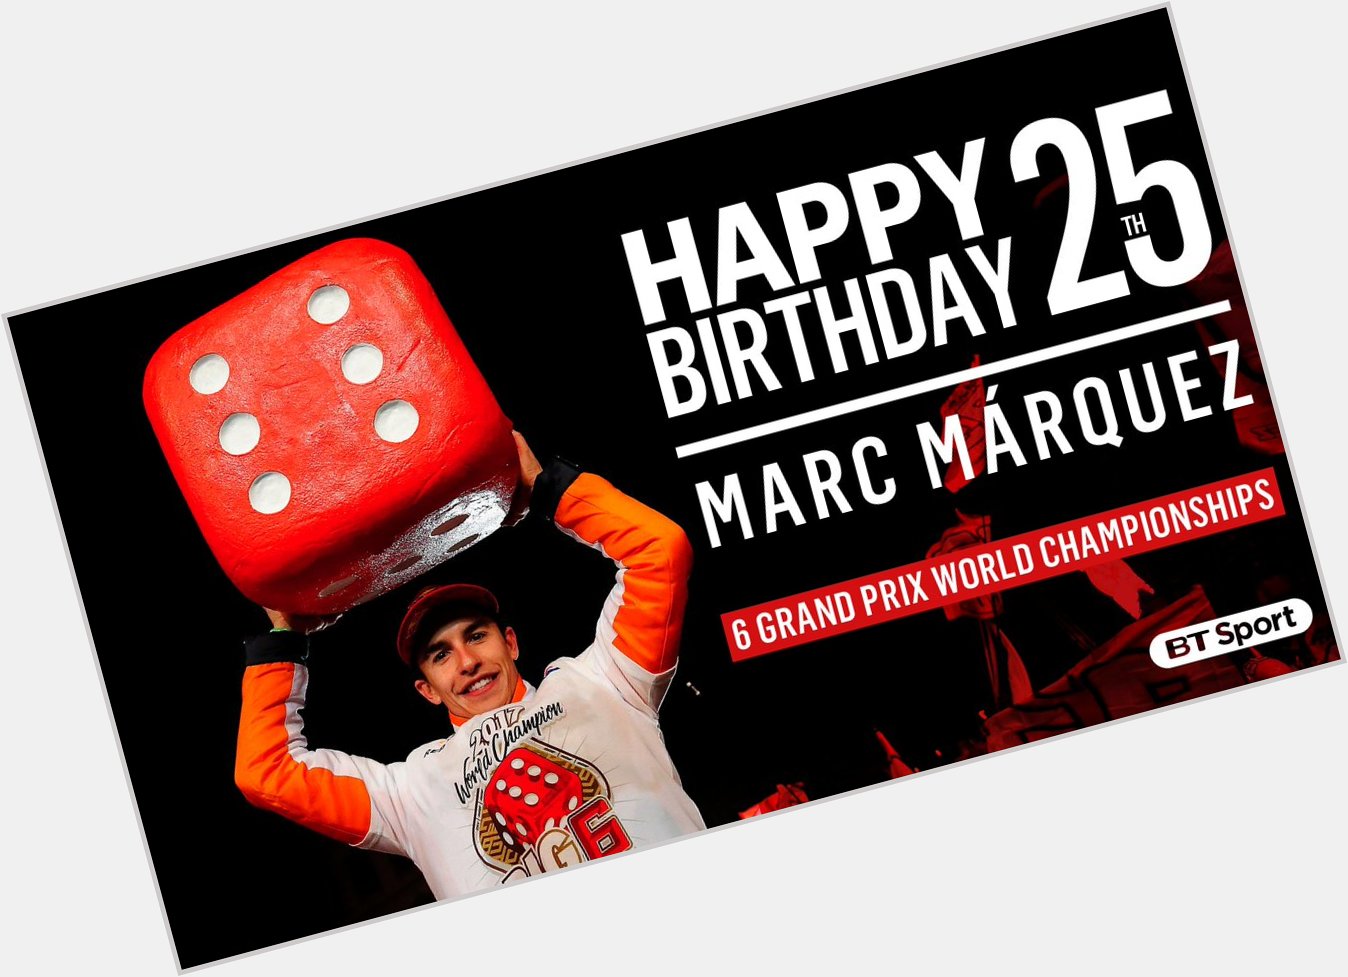 2010 2012 2013 2014 2016 2017 Happy 25th birthday to Mr. Marc Márquez 